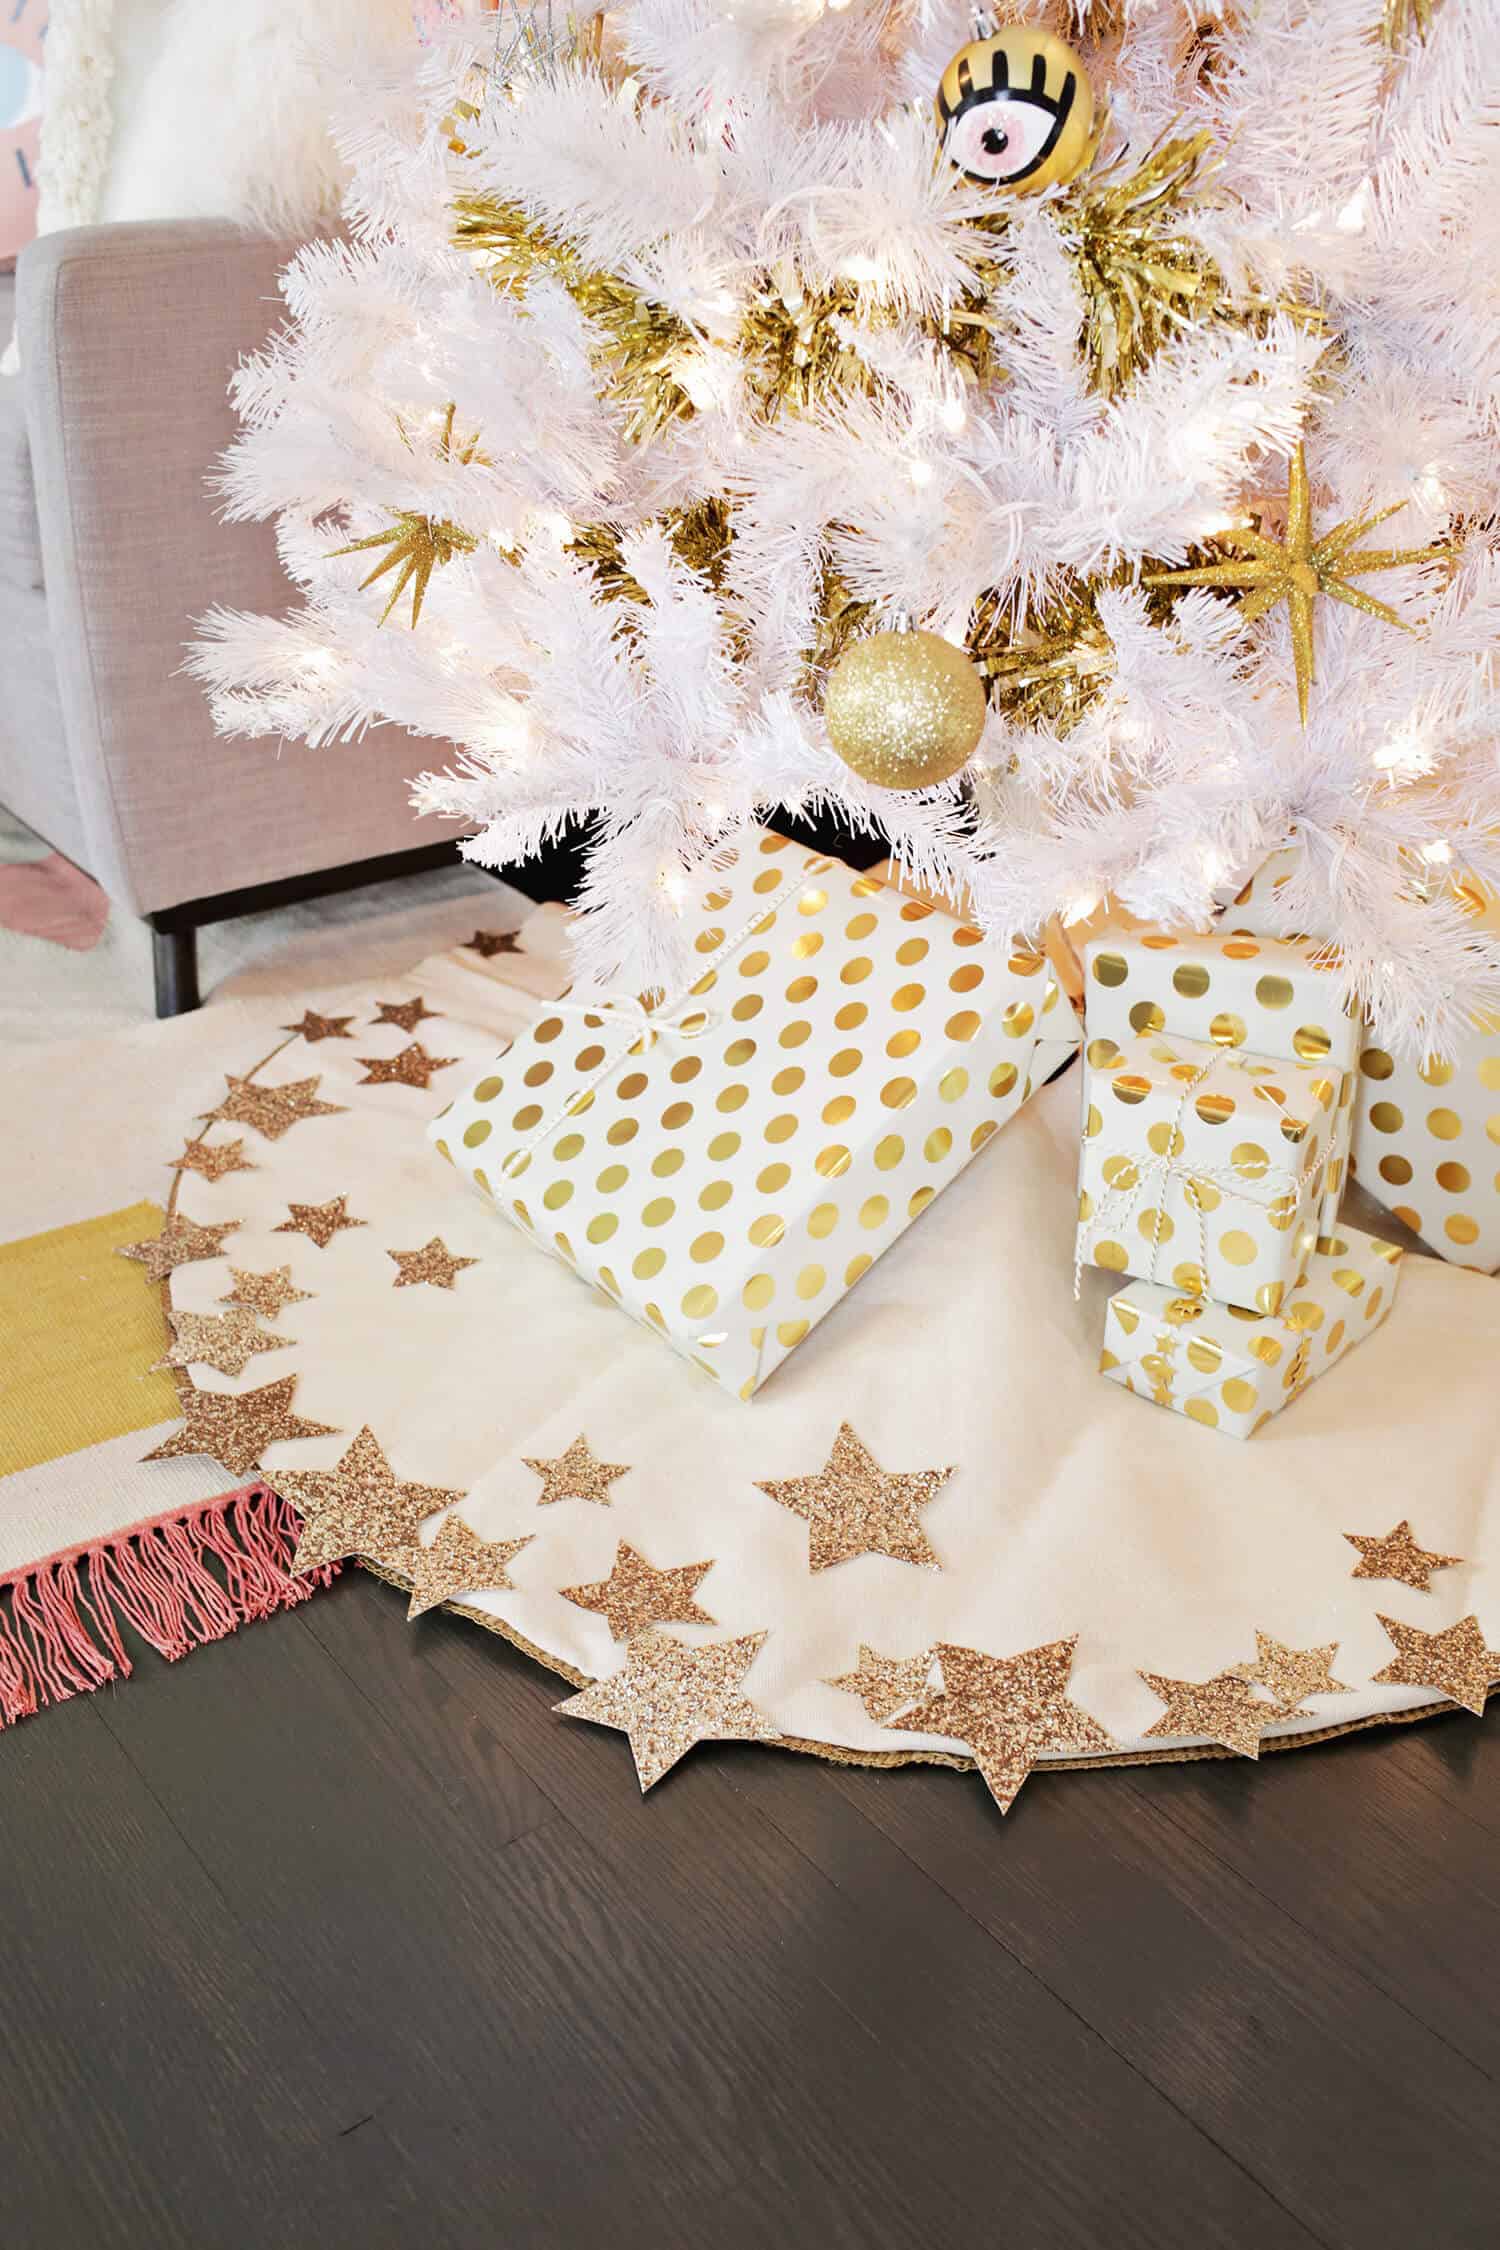 DIY glitter star white Christmas tree skirt (via abeautifulmess.com)